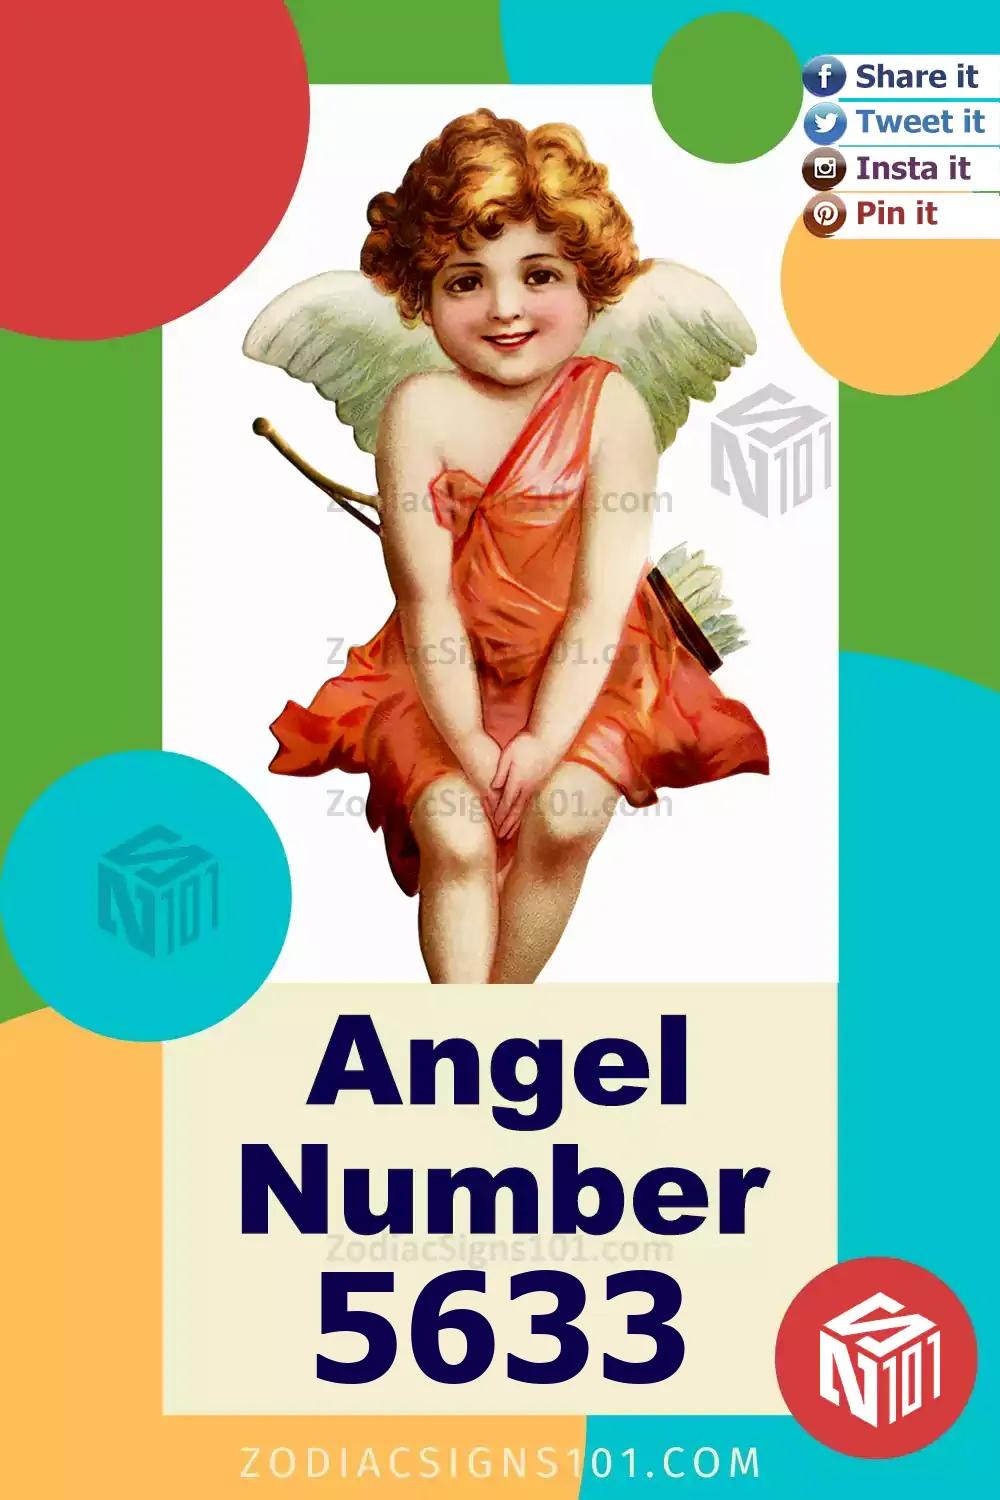 5633-Angel-Number-Meaning.jpg